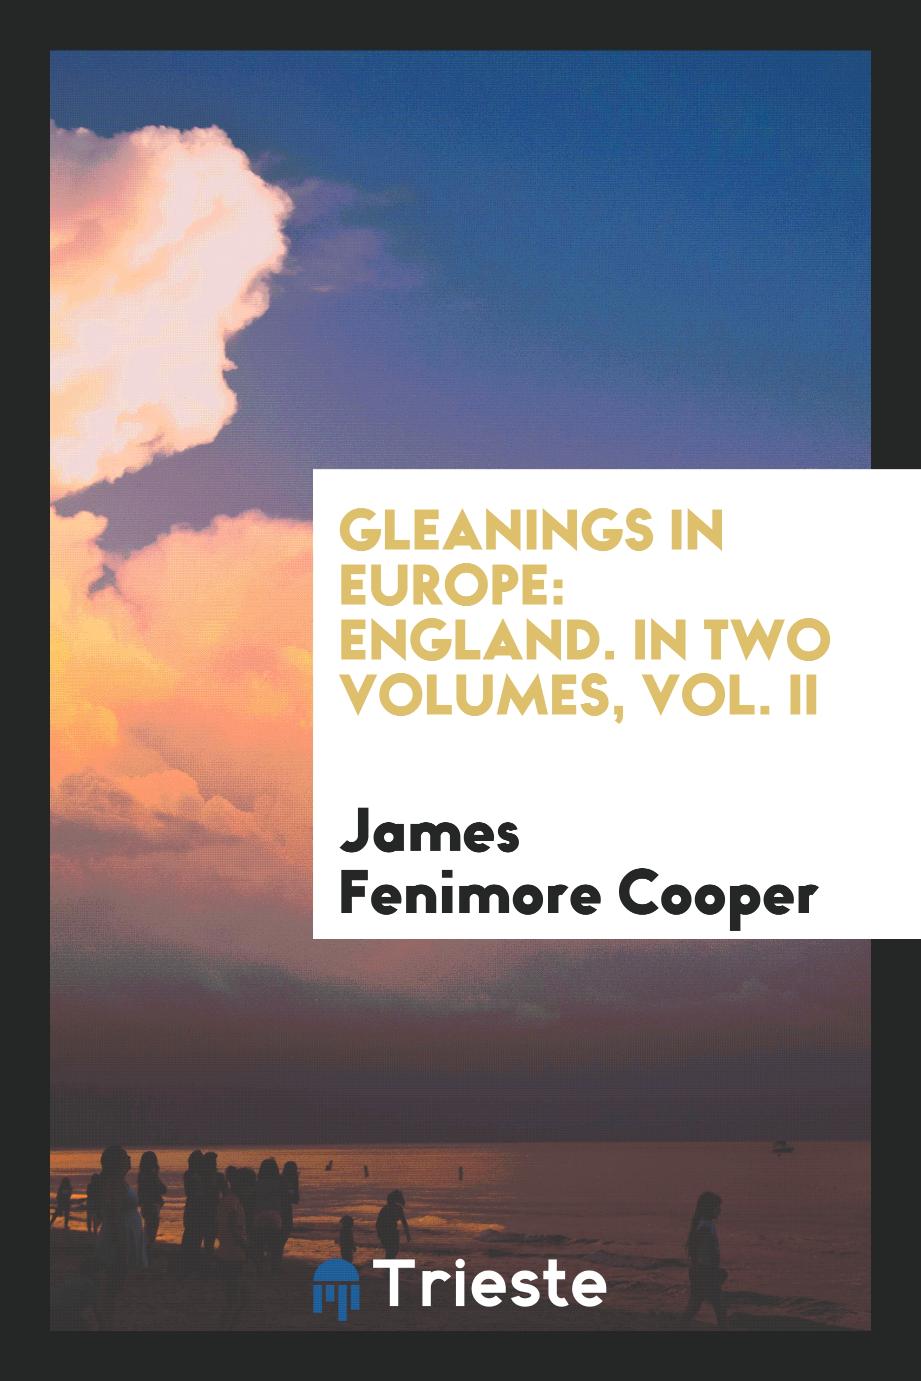 Gleanings in Europe: England. In Two Volumes, Vol. II